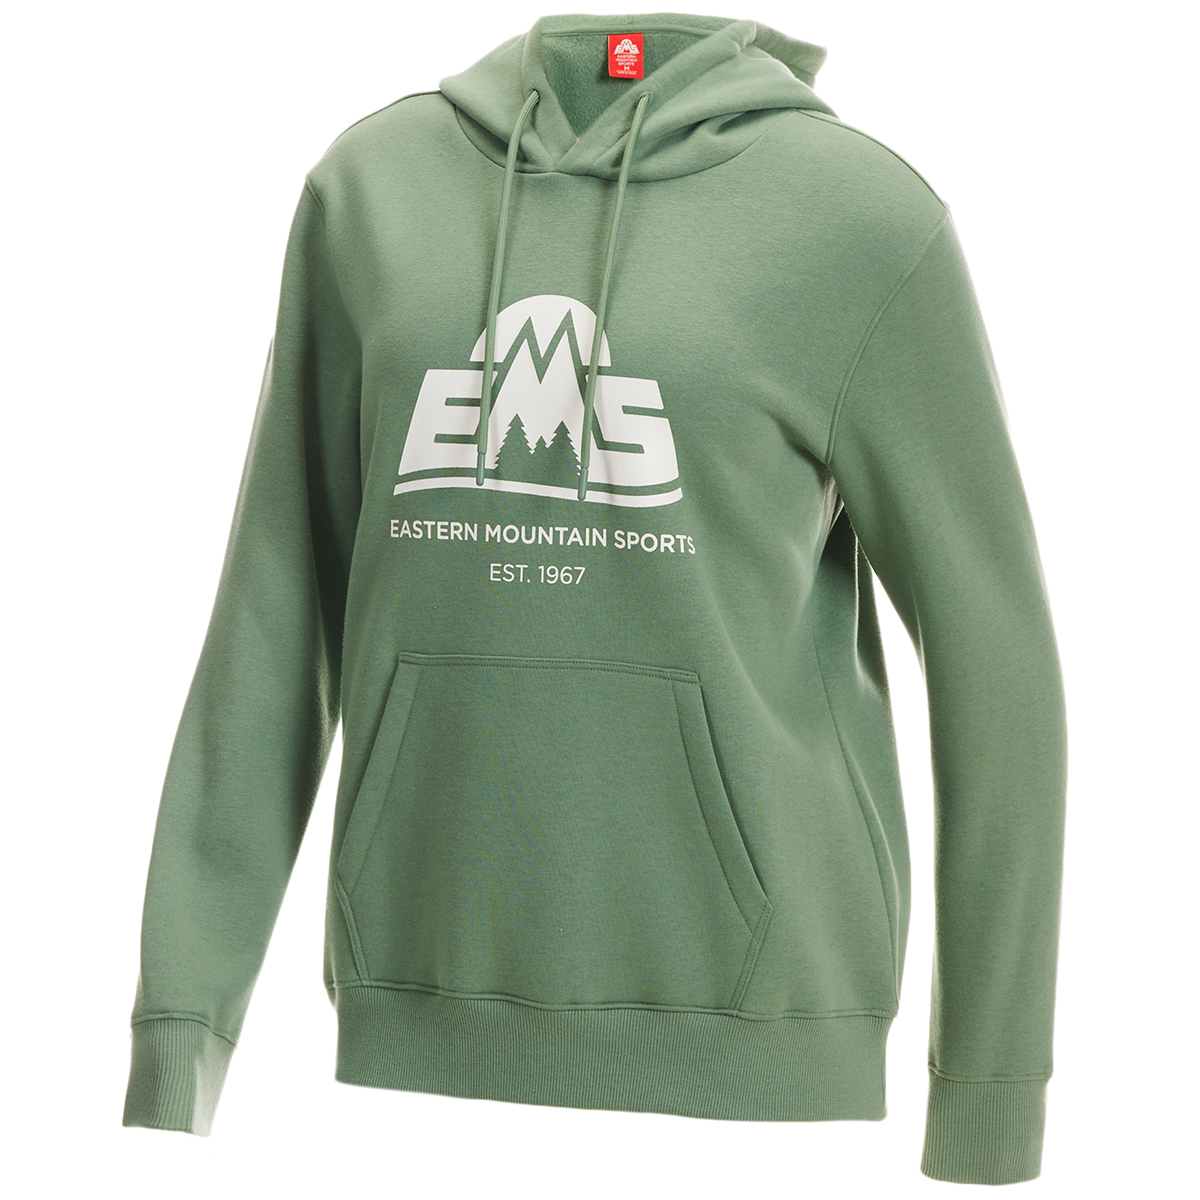 Ems Women's Graphic Hoodie Sweatshirt